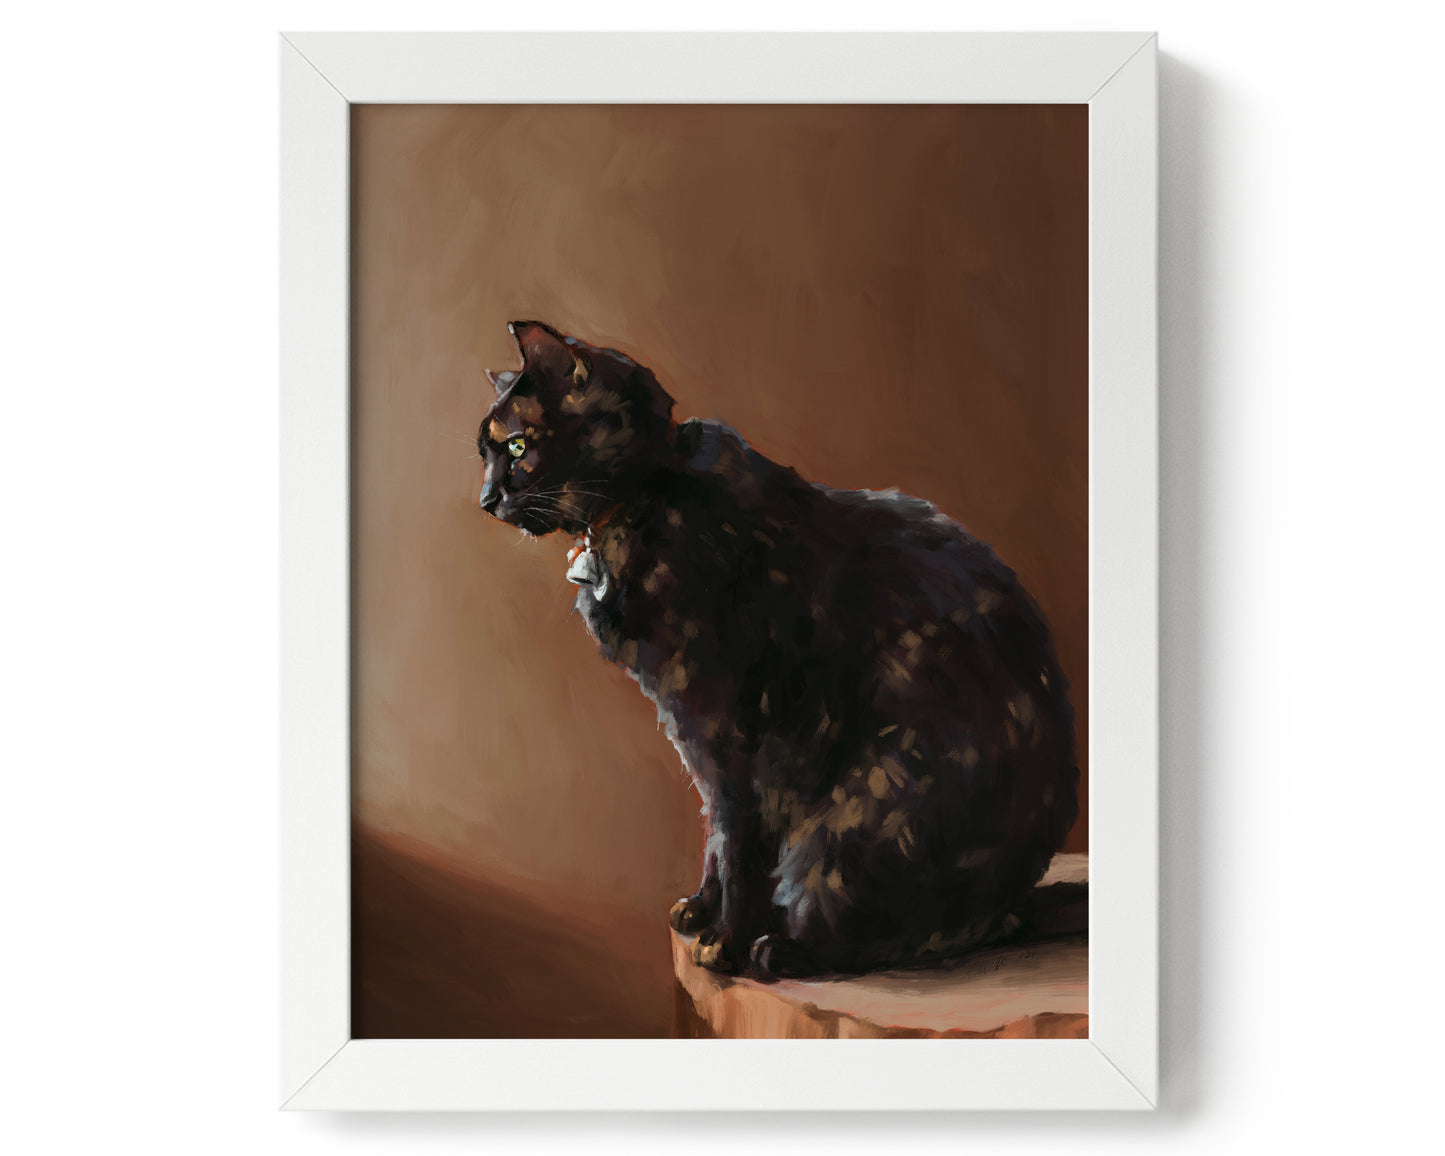 "Jarousse" by Catherine Hébert - Tortoiseshell Cat Painting Art Print - 8"x10" size